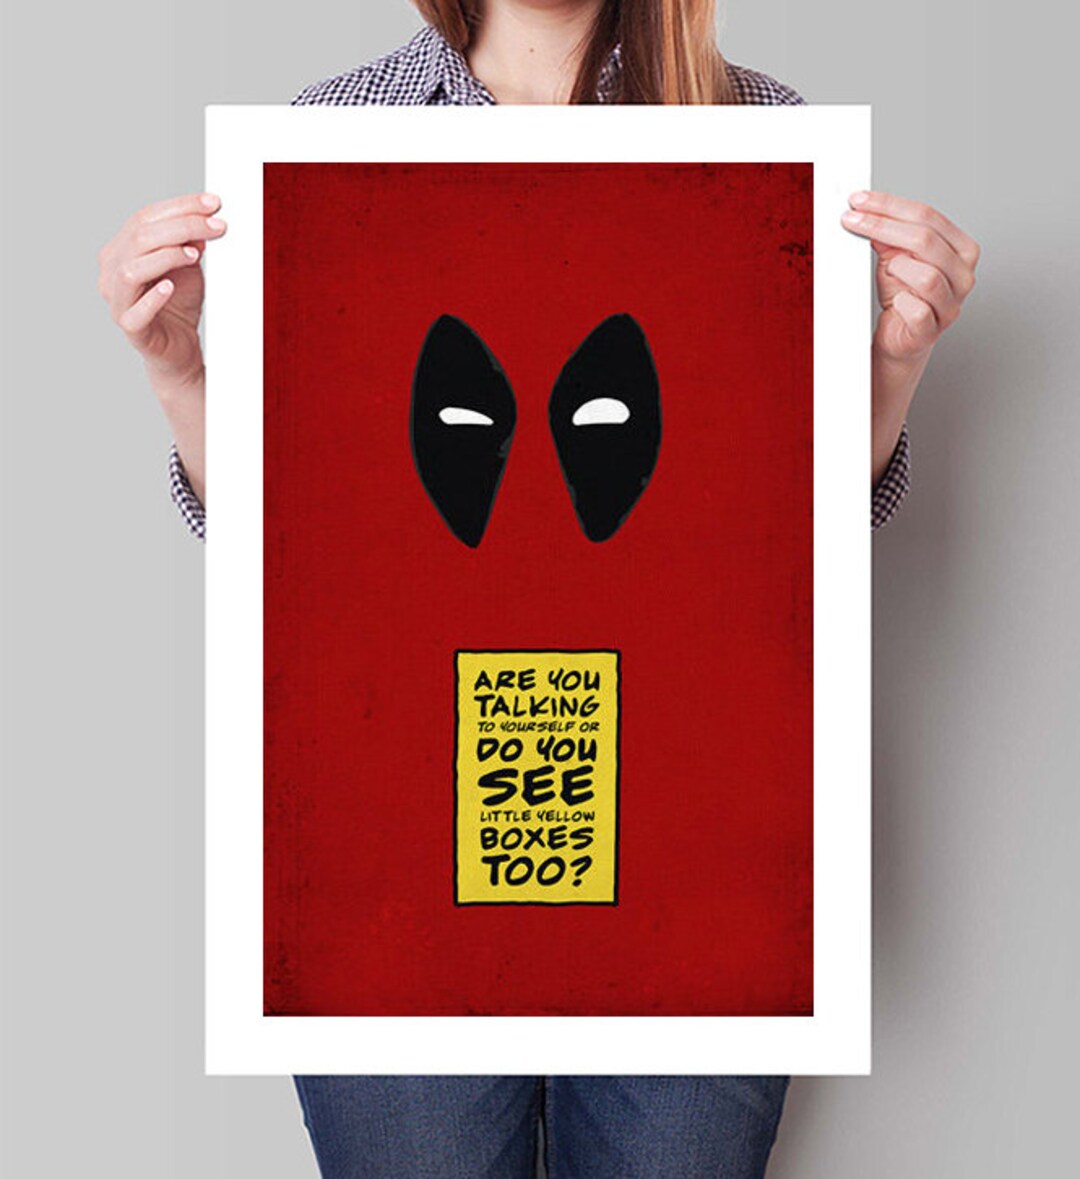 Deadpool 3 Marvel Studios Movie Posters (11x17) Glossy Movie Poster